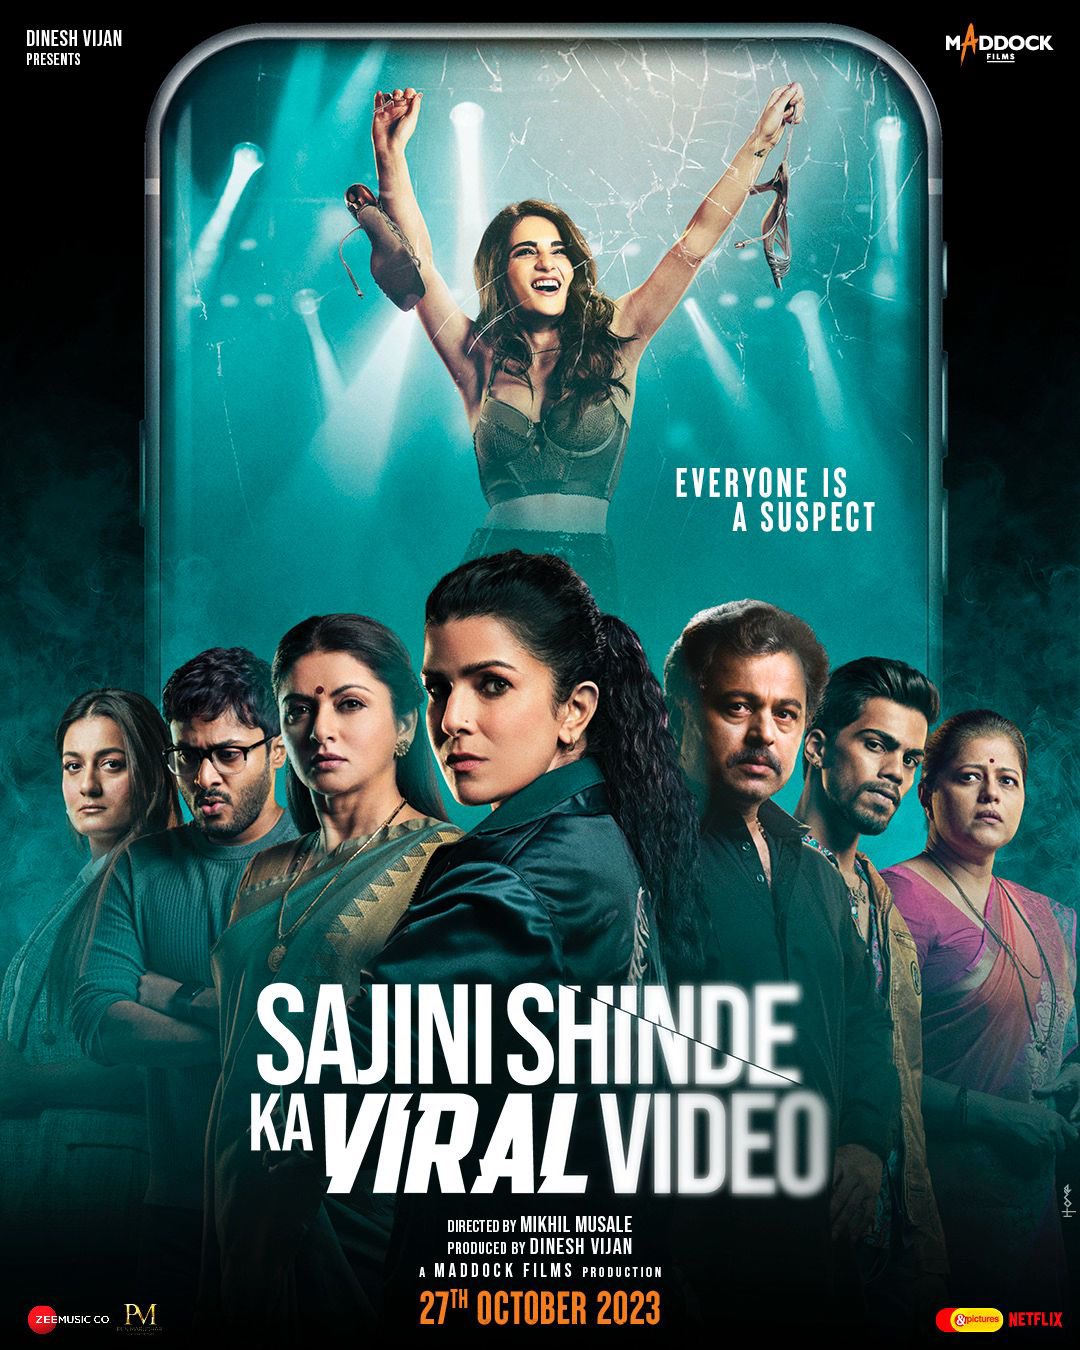 Sajini Shinde Ka Viral Video (2023) Hindi 720p